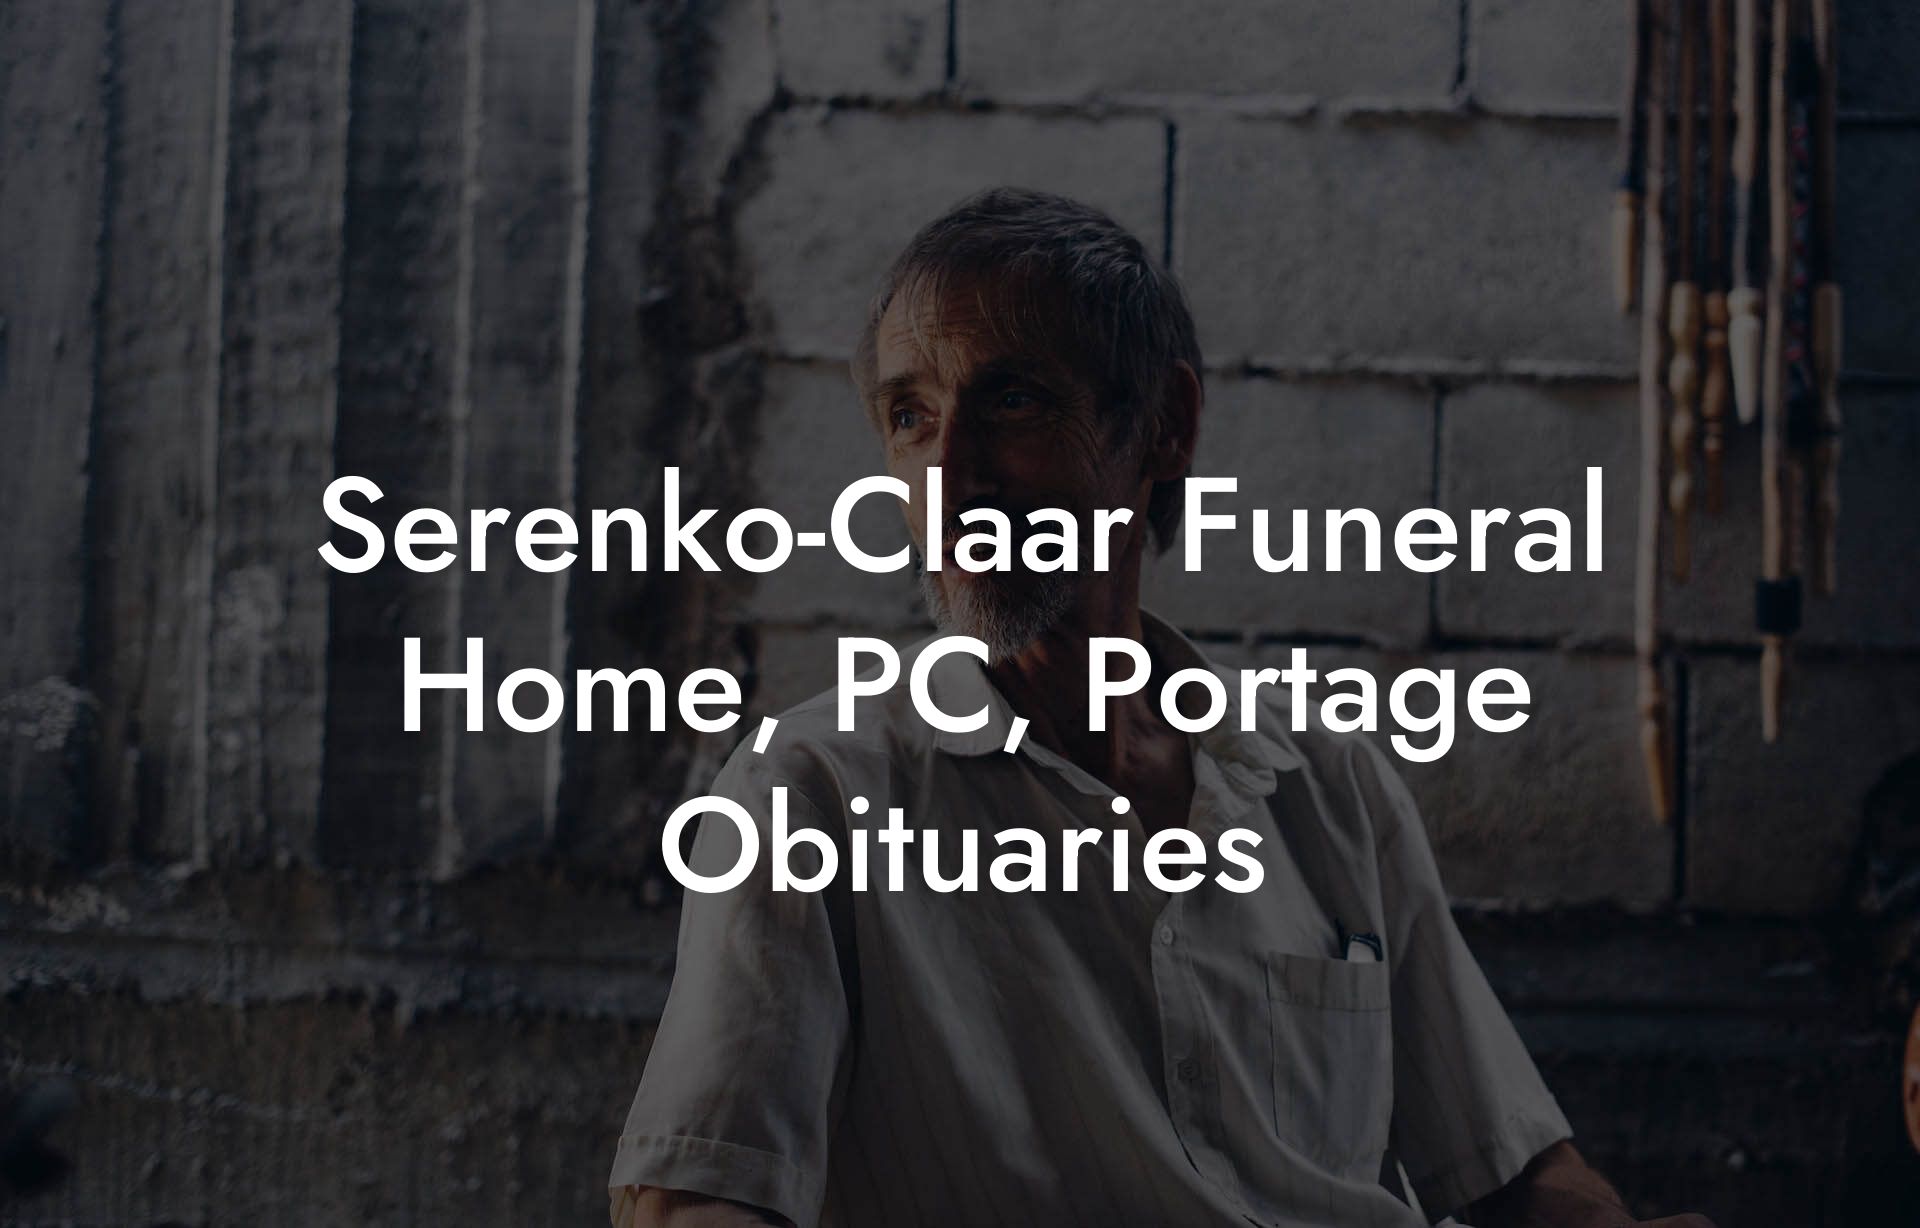 Serenko-Claar Funeral Home, PC, Portage Obituaries